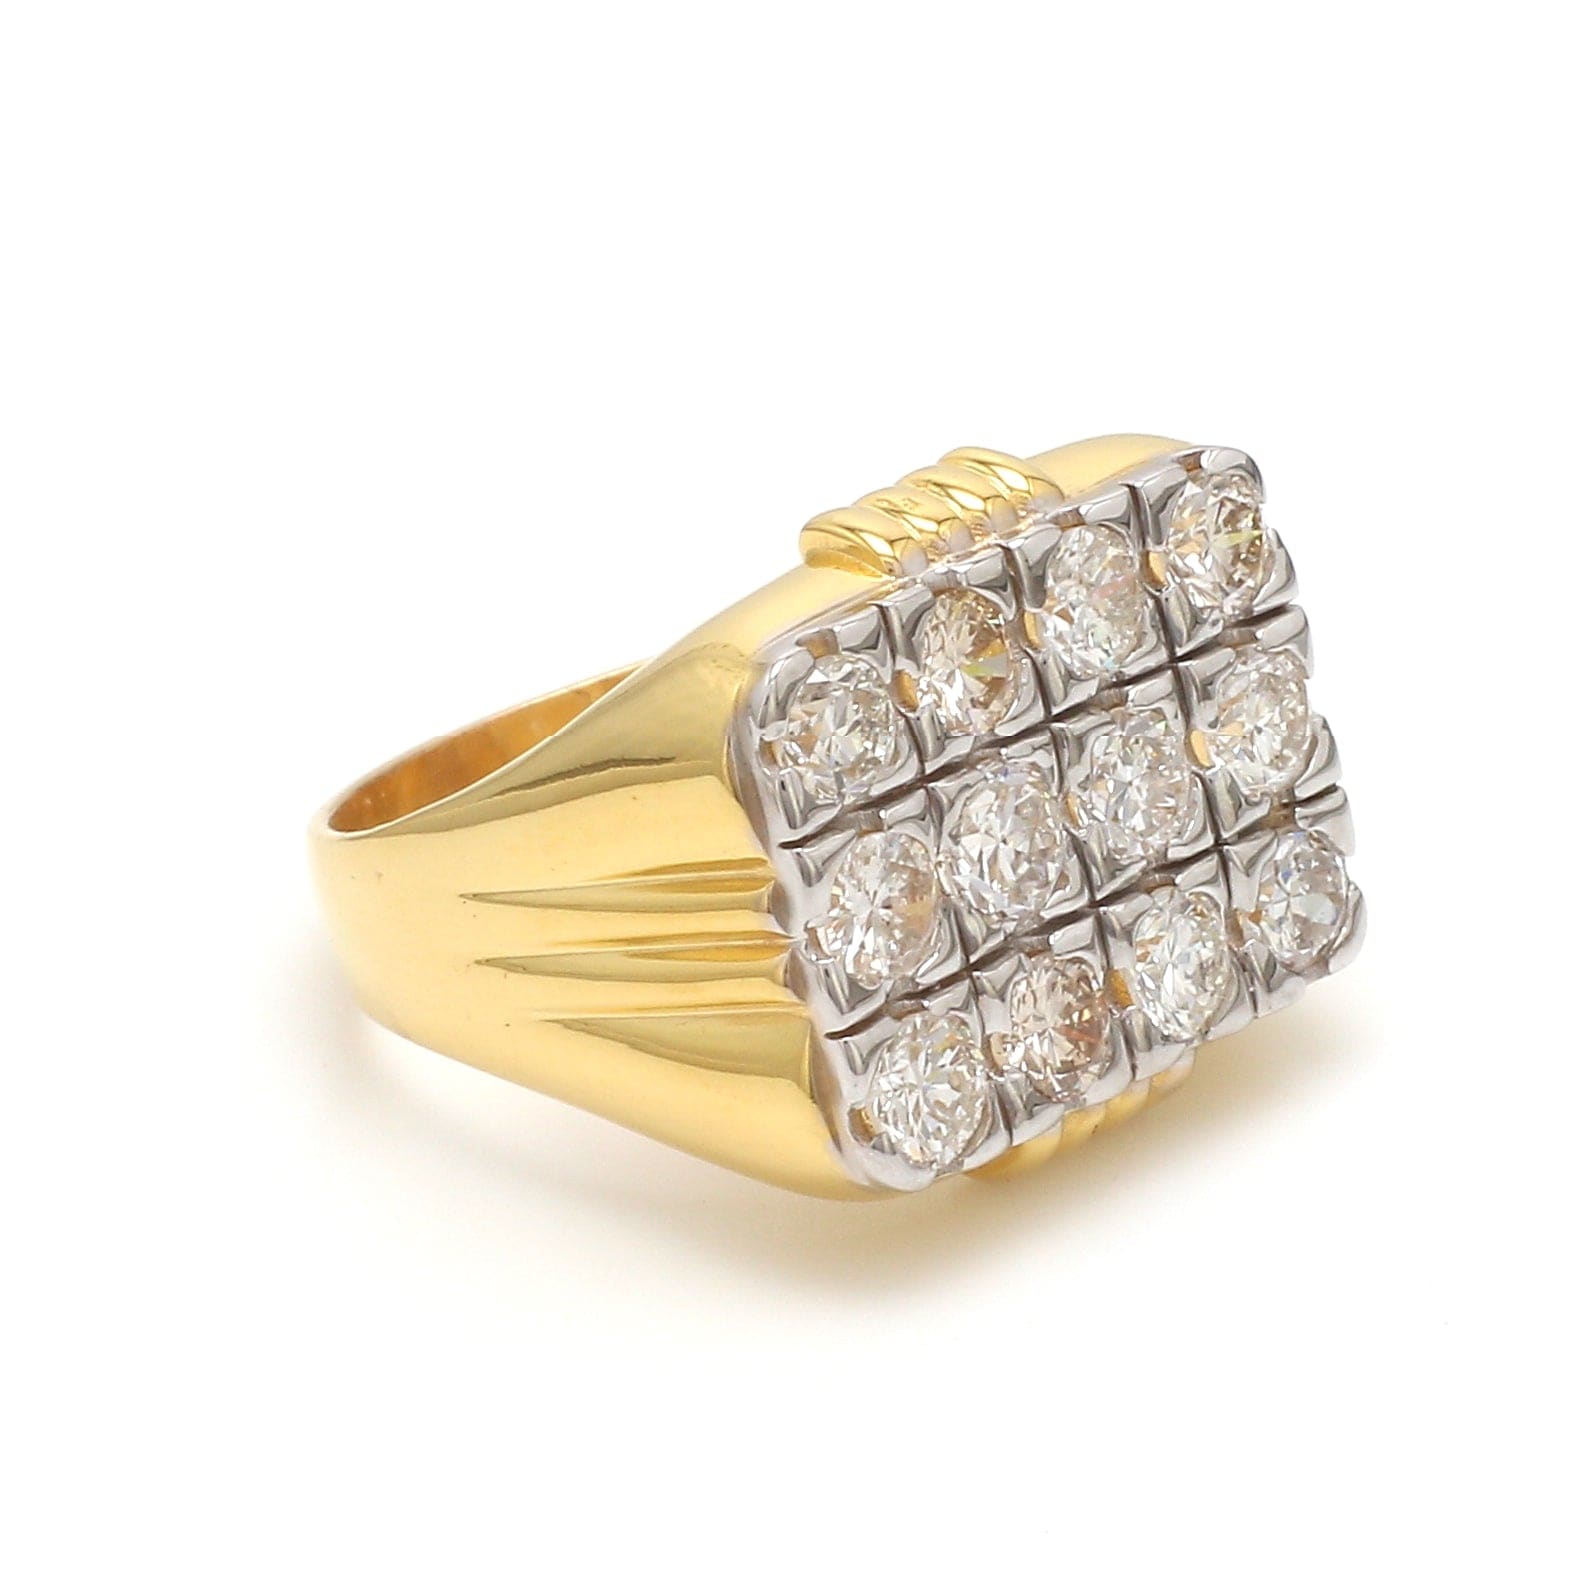 18kt Designer type Diamond Ring Price in Kerala | Lowest Rate